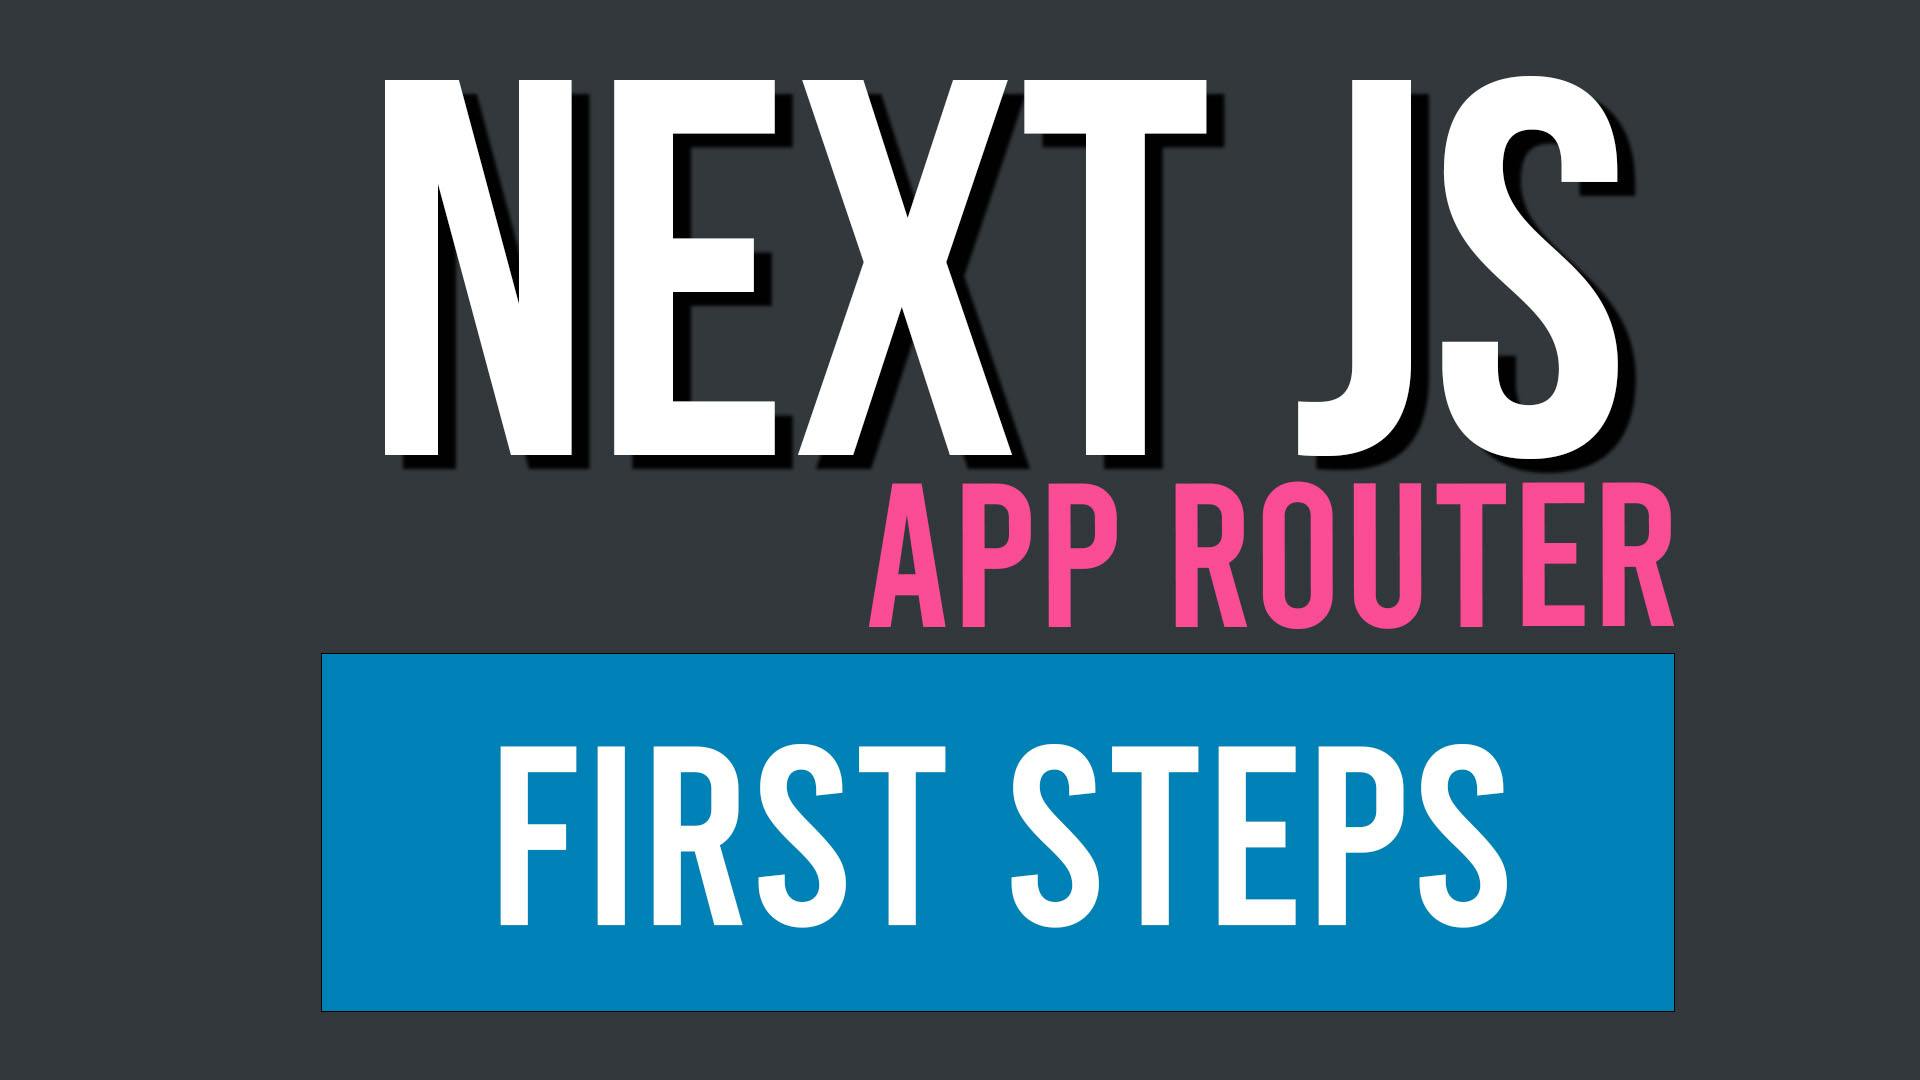 Next Js: The app router in practice